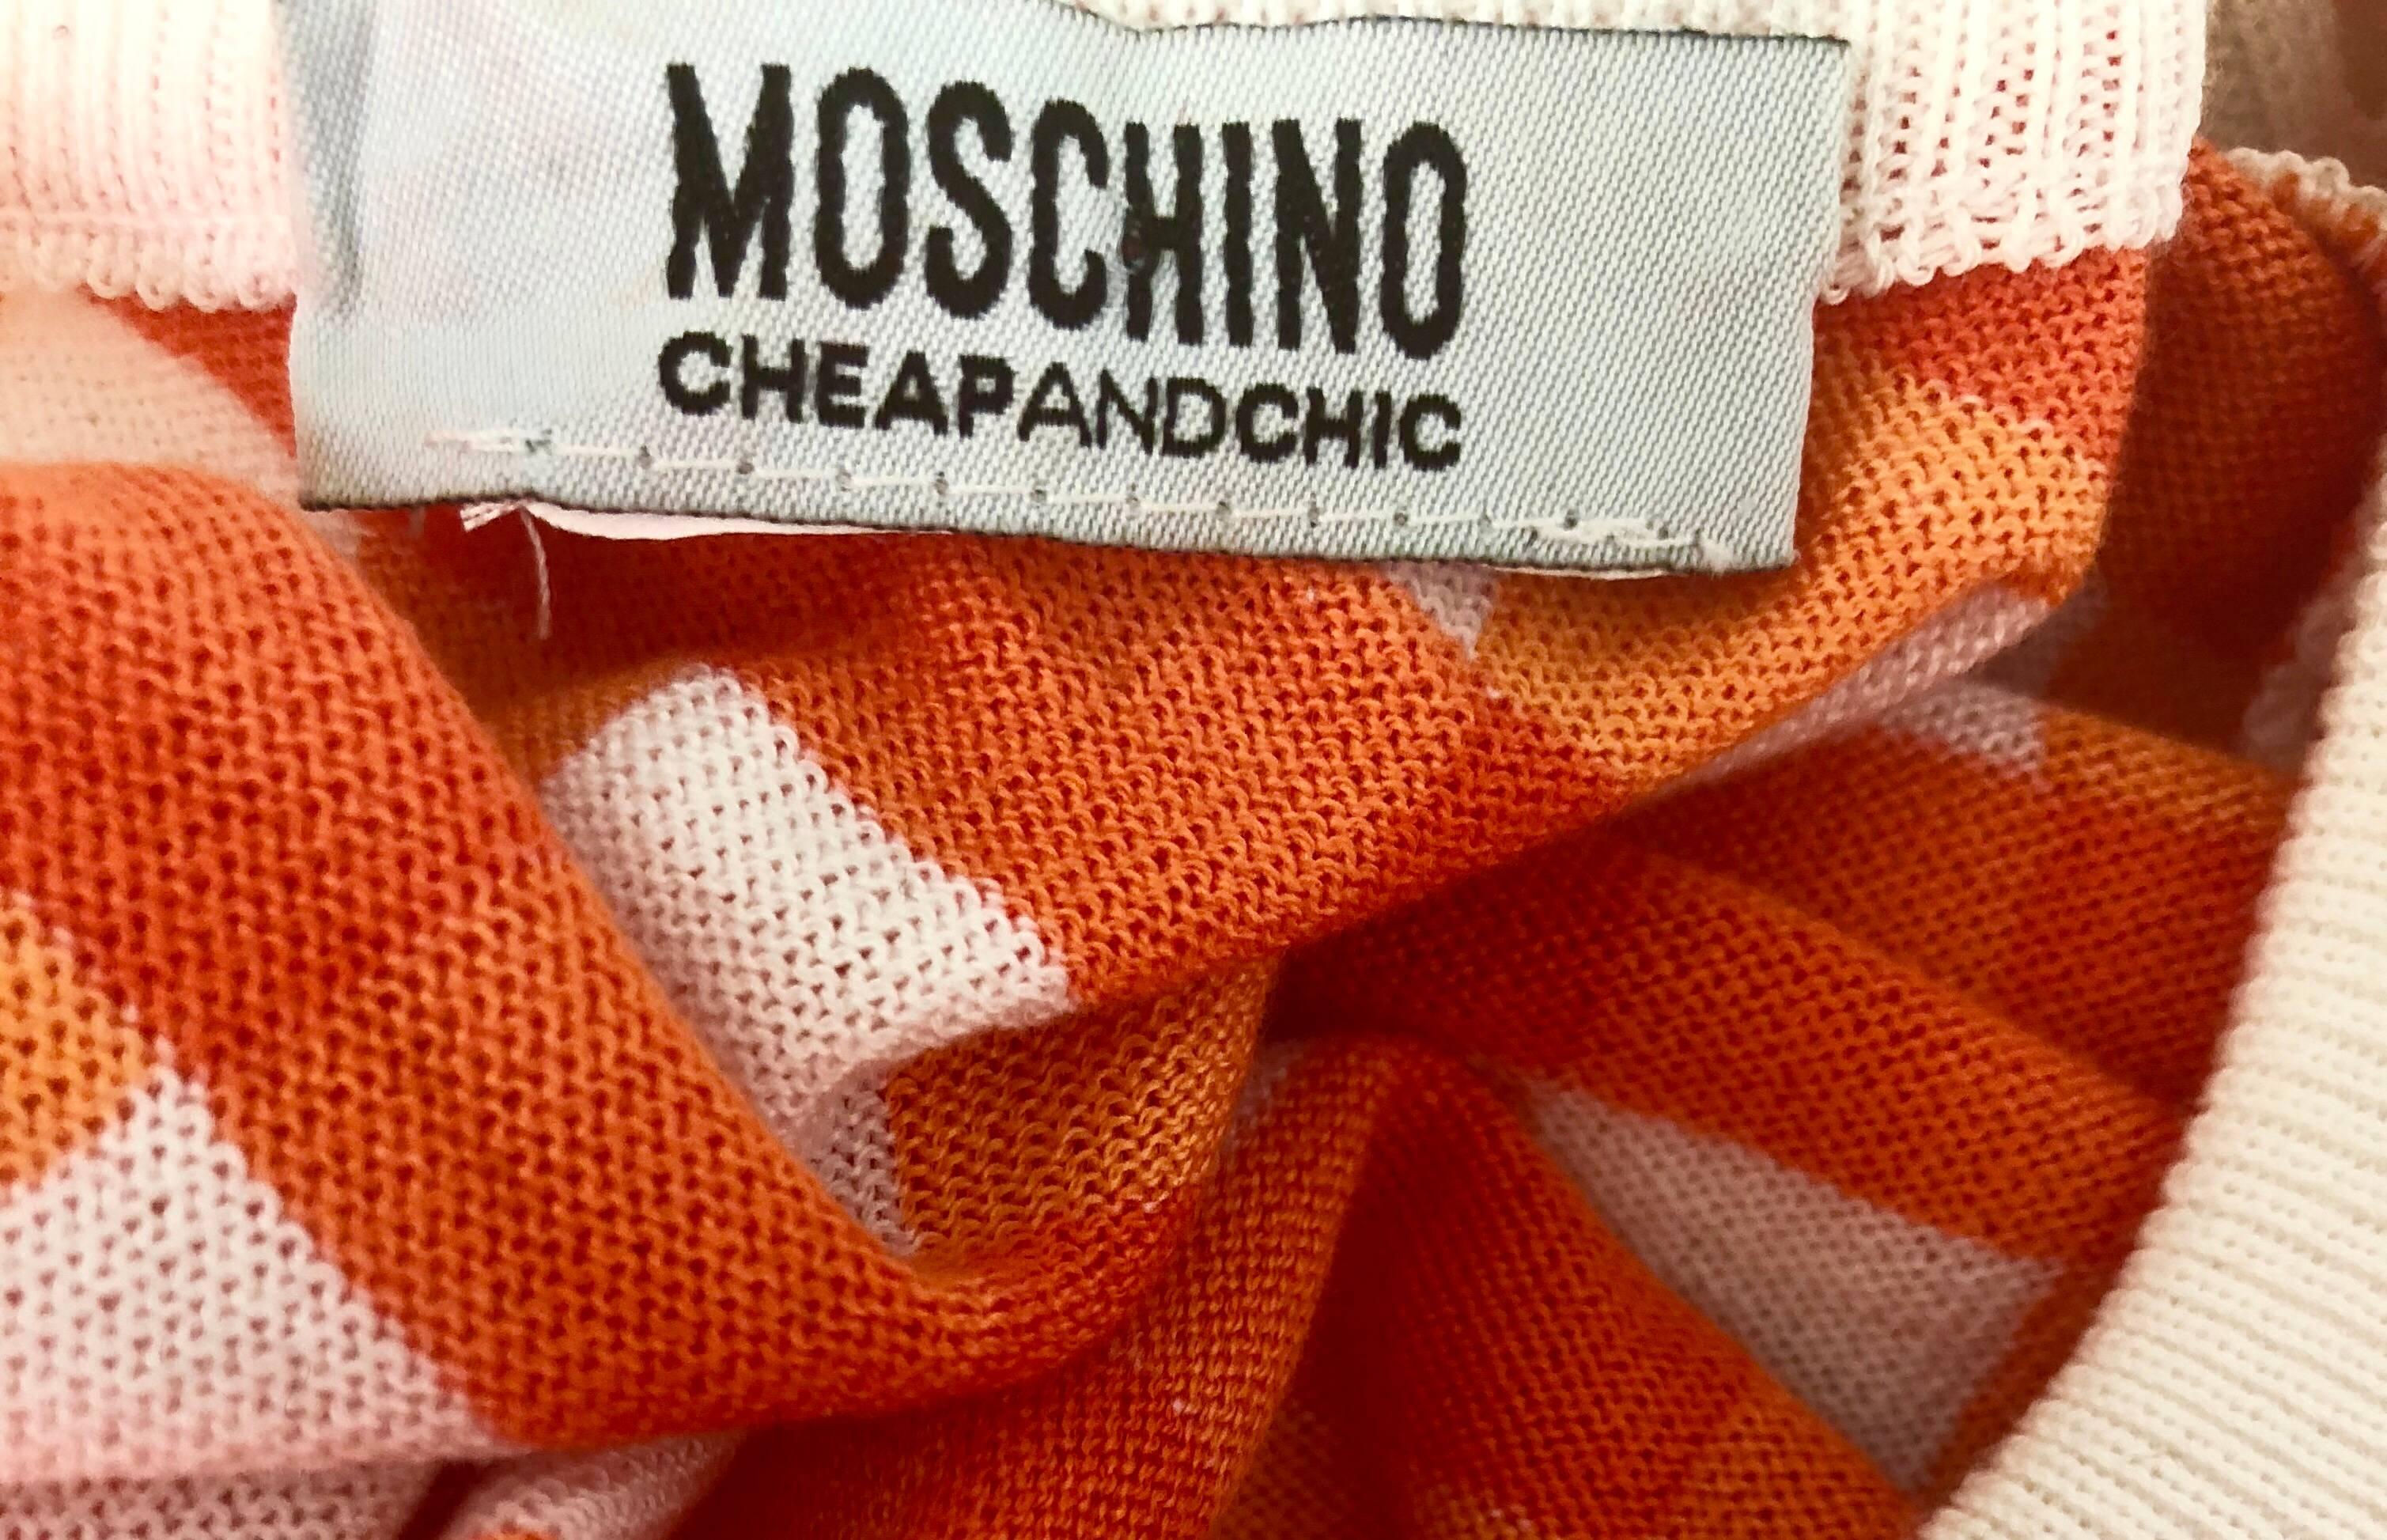 Vintage Moschino Cheap & Chic 1990s Orange + White Gingham Bodycon 90s Dress 2